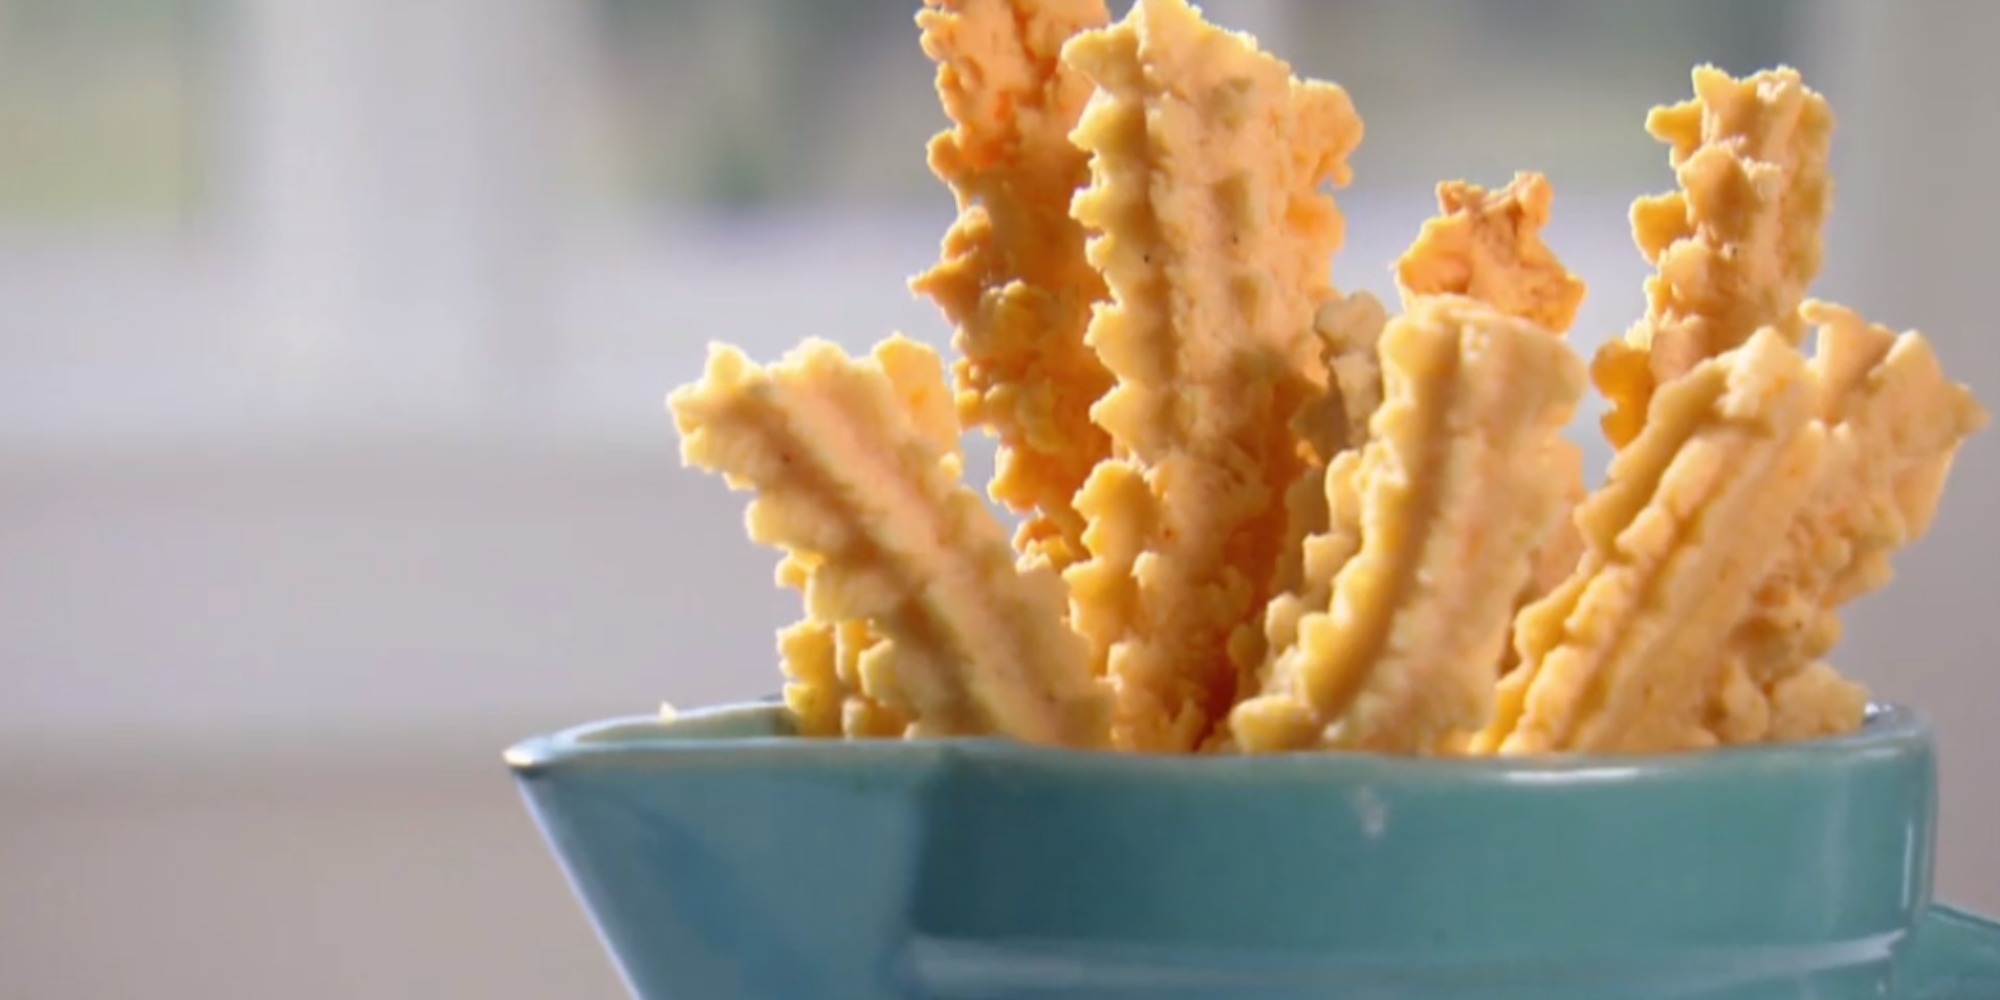 Trisha Yearwood makes savory cheese straws in a Food Network video.